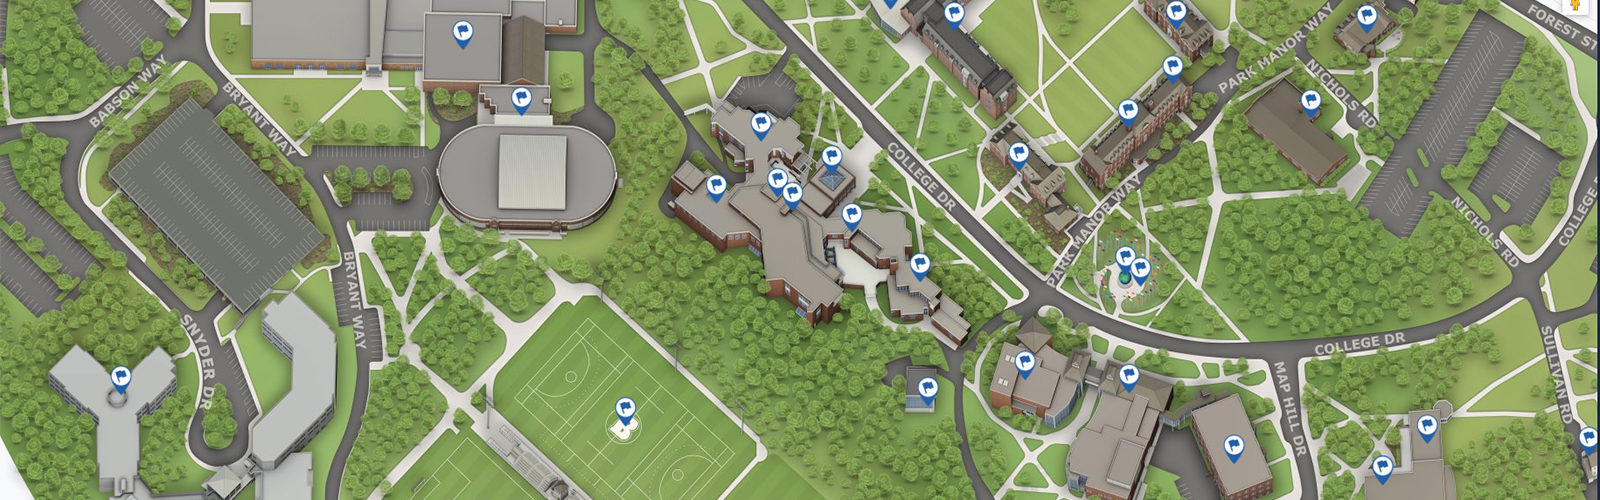 beplay平台下载Babson Wellesley校园地图